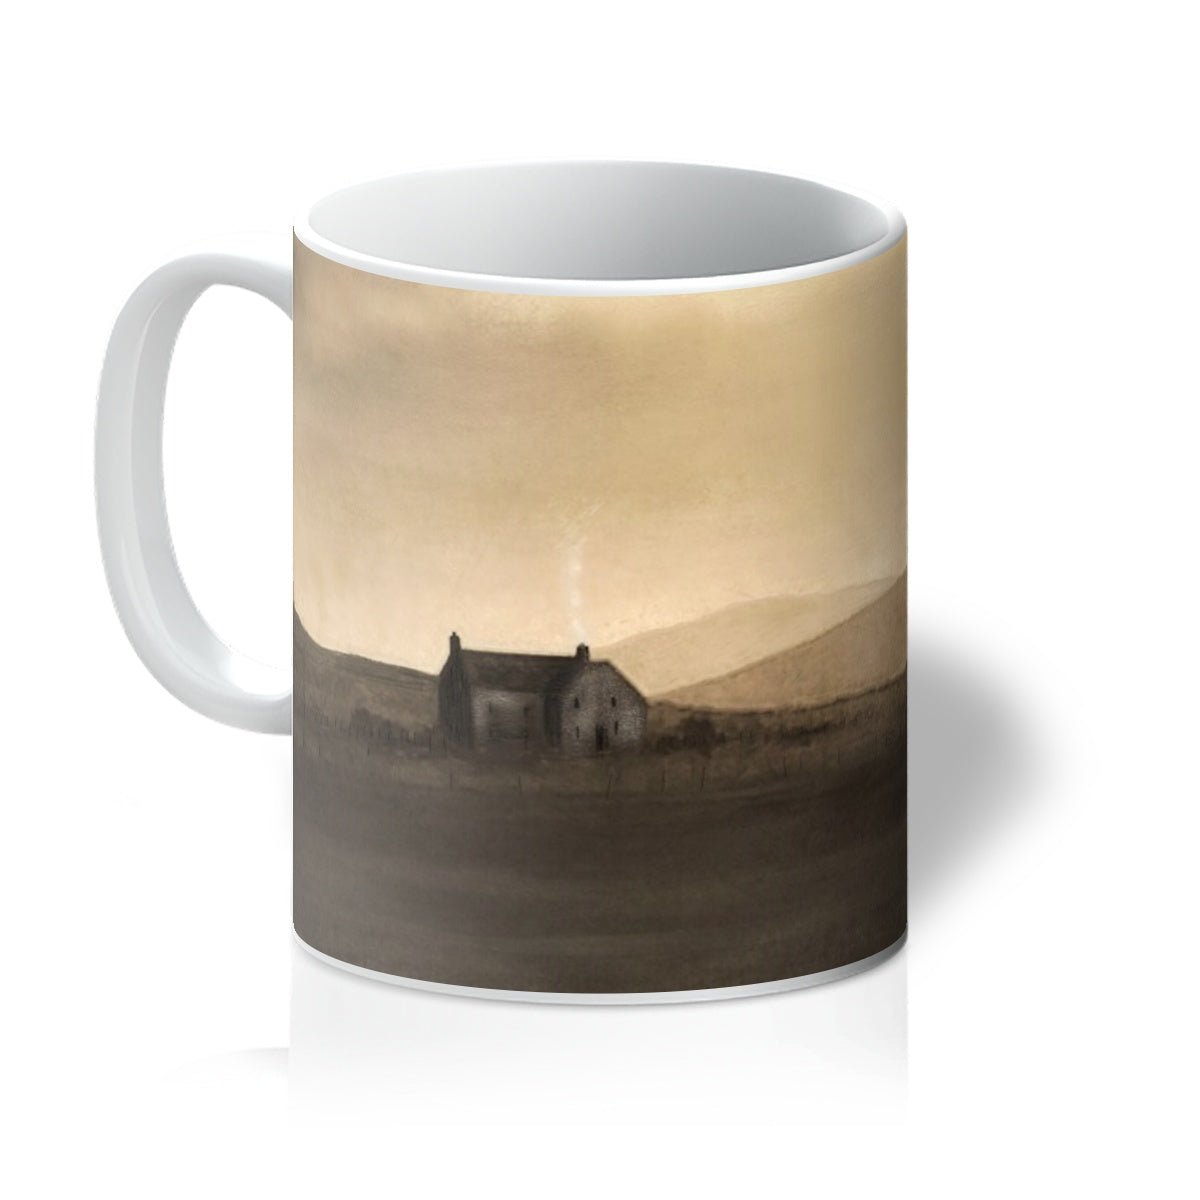 A Moonlit Croft Art Gifts Mug-Mugs-Hebridean Islands Art Gallery-11oz-White-Paintings, Prints, Homeware, Art Gifts From Scotland By Scottish Artist Kevin Hunter